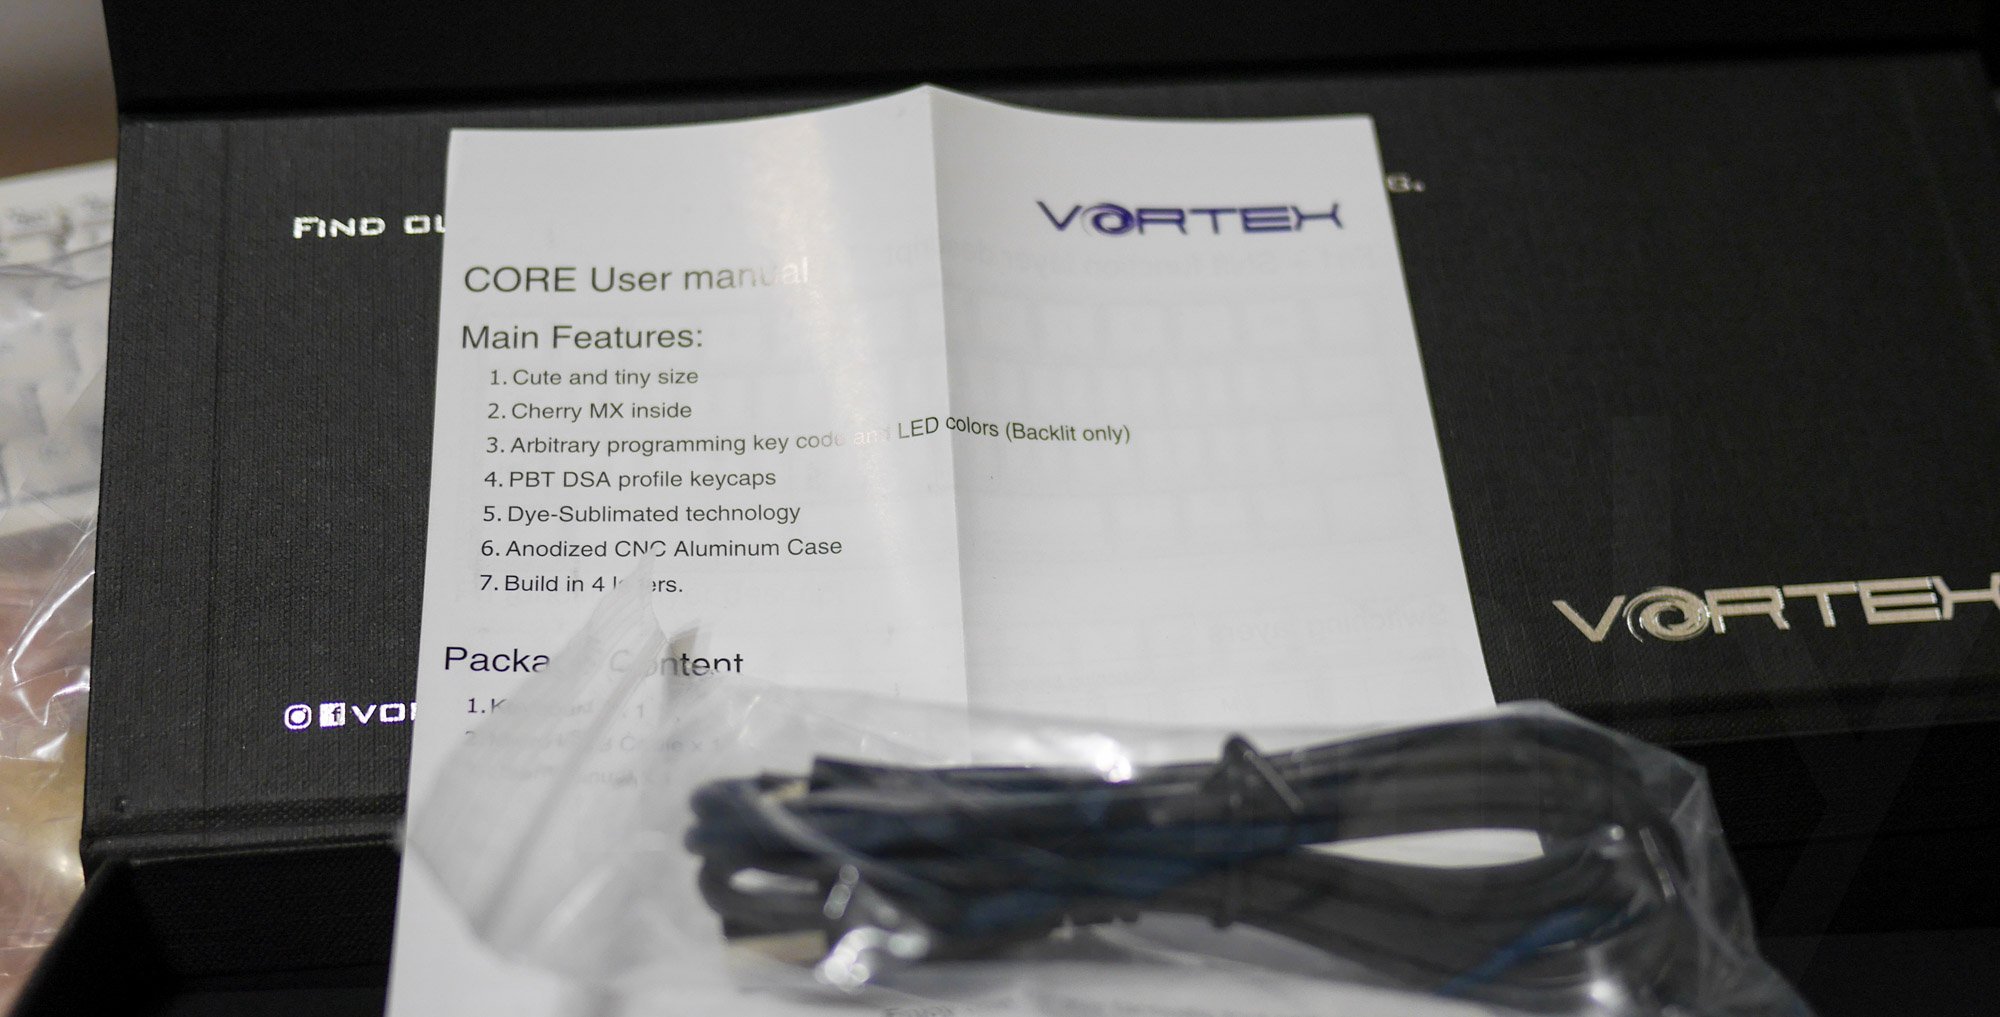 Vortex Core: Manual and micro-USB cable